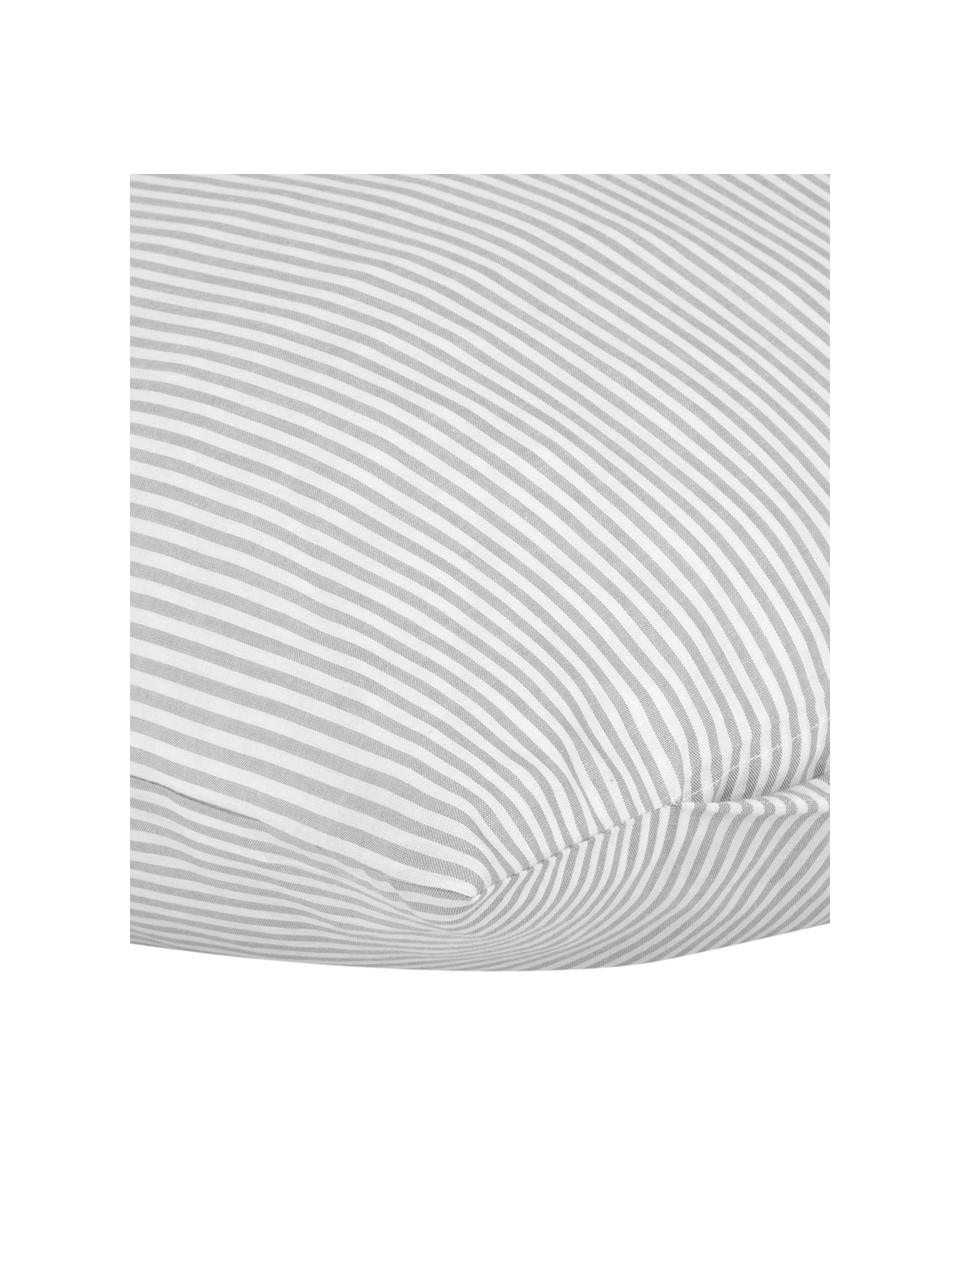 Funda de almohada de algodón Ellie, 45 x 110 cm, Blanco, gris, An 45 x L 110 cm